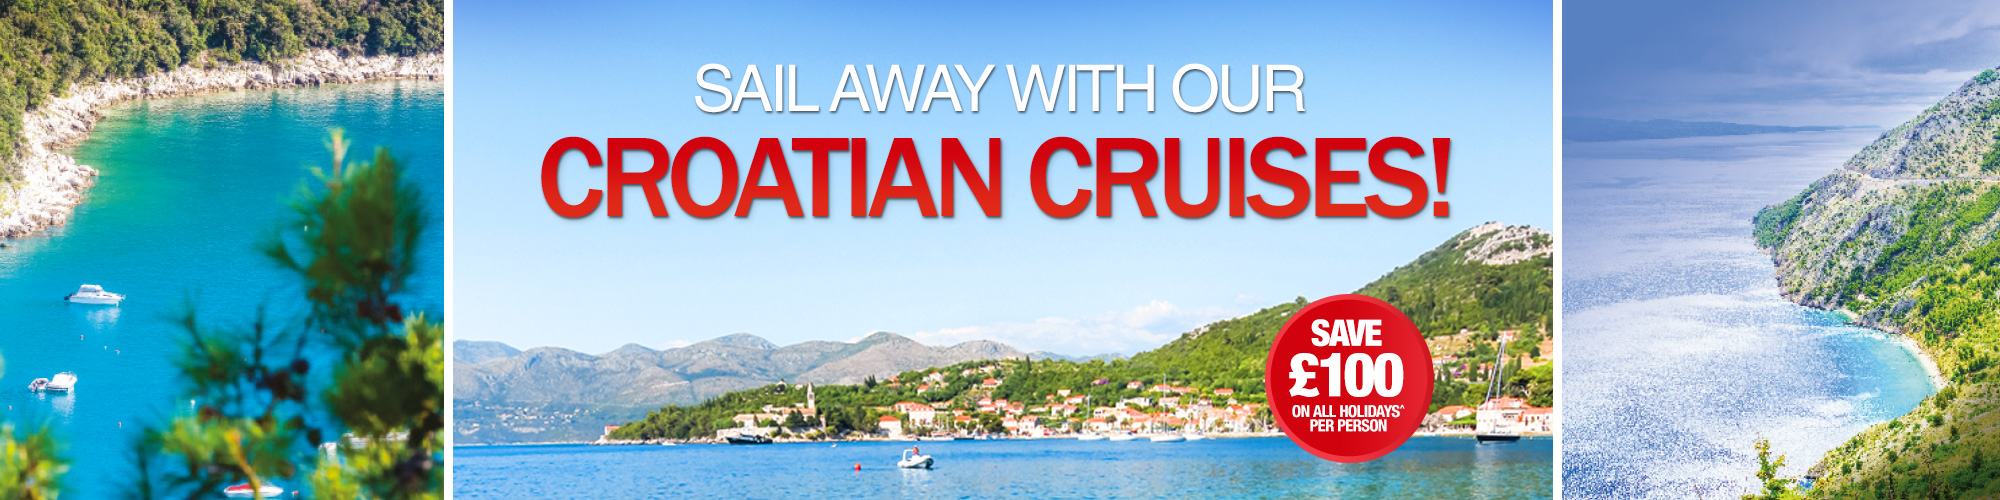 jet2 holiday cruises croatia